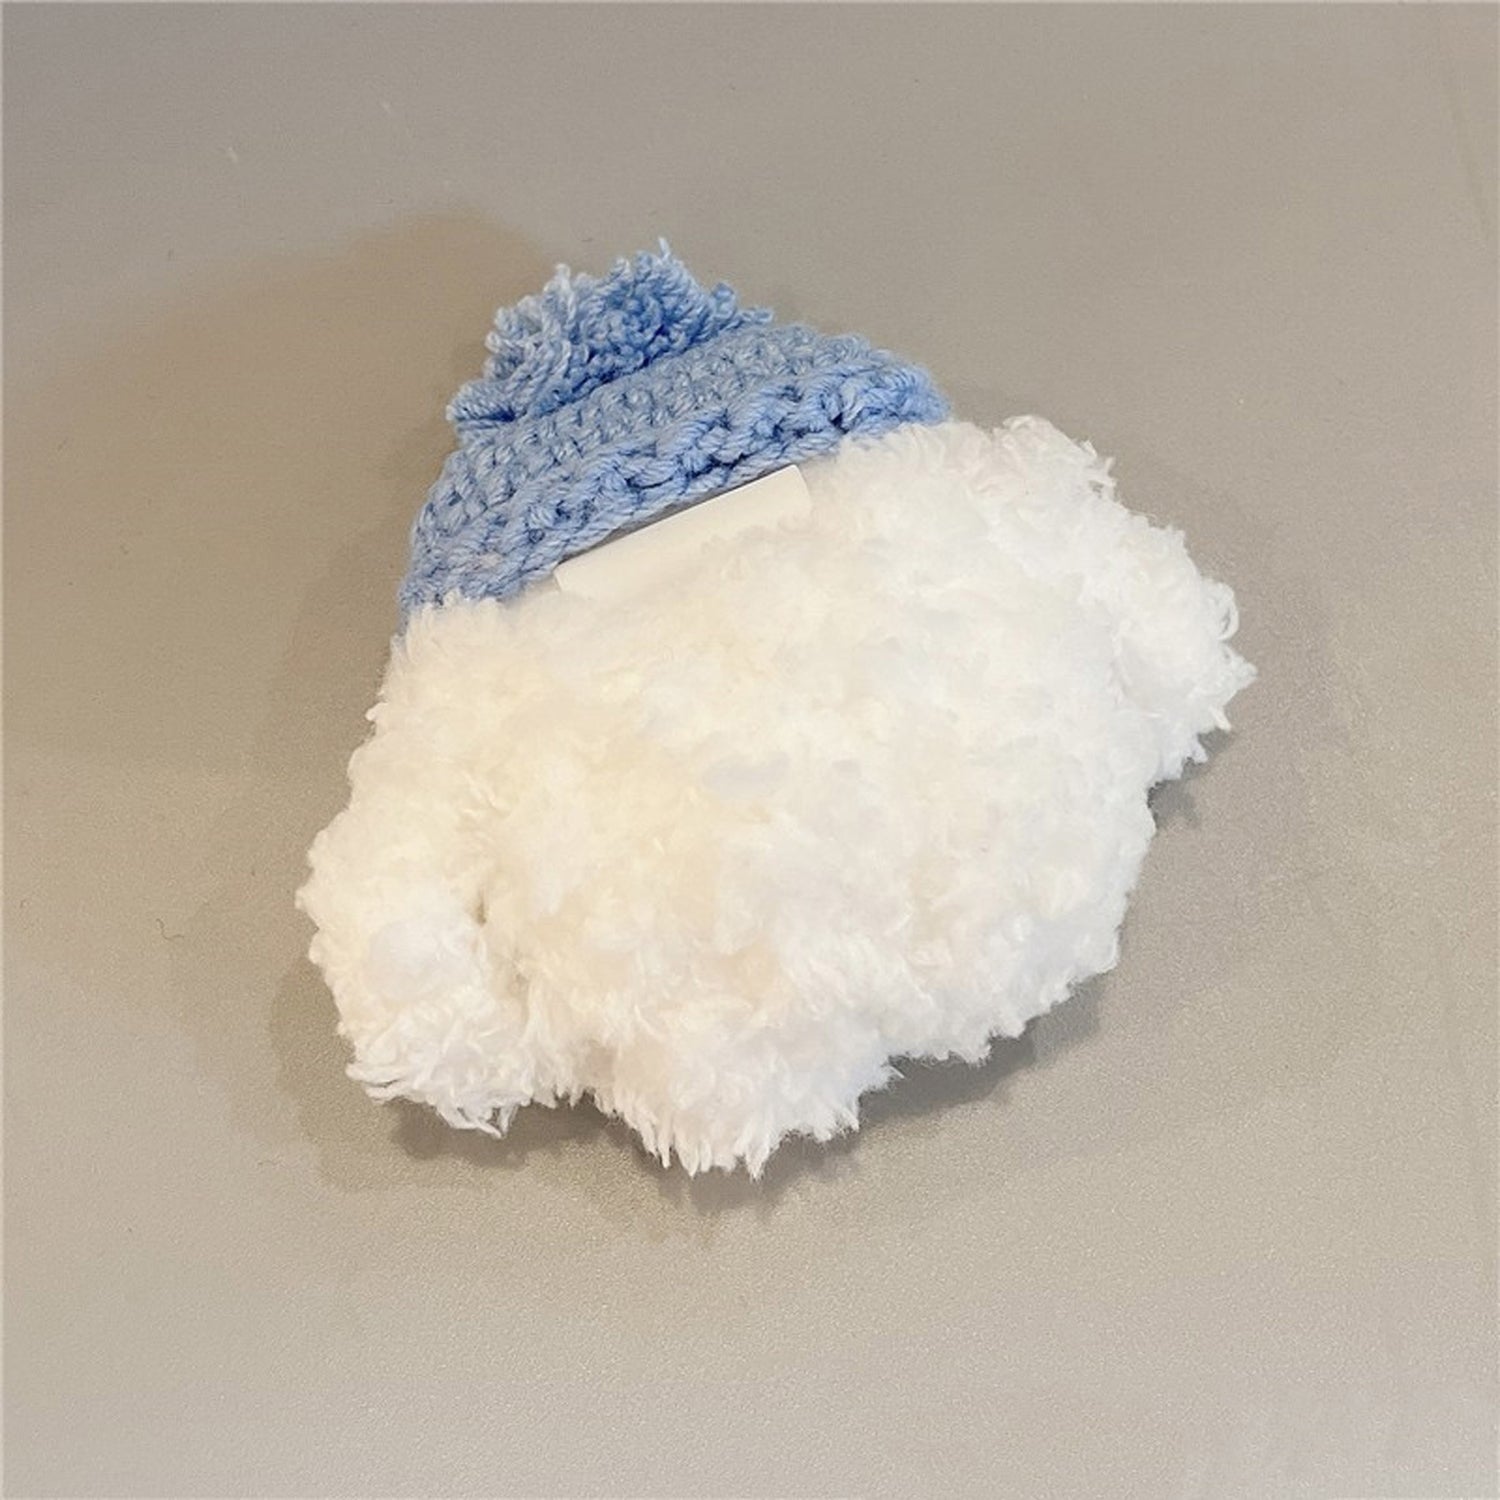 Crochet Cute White Puppy Airpods Case